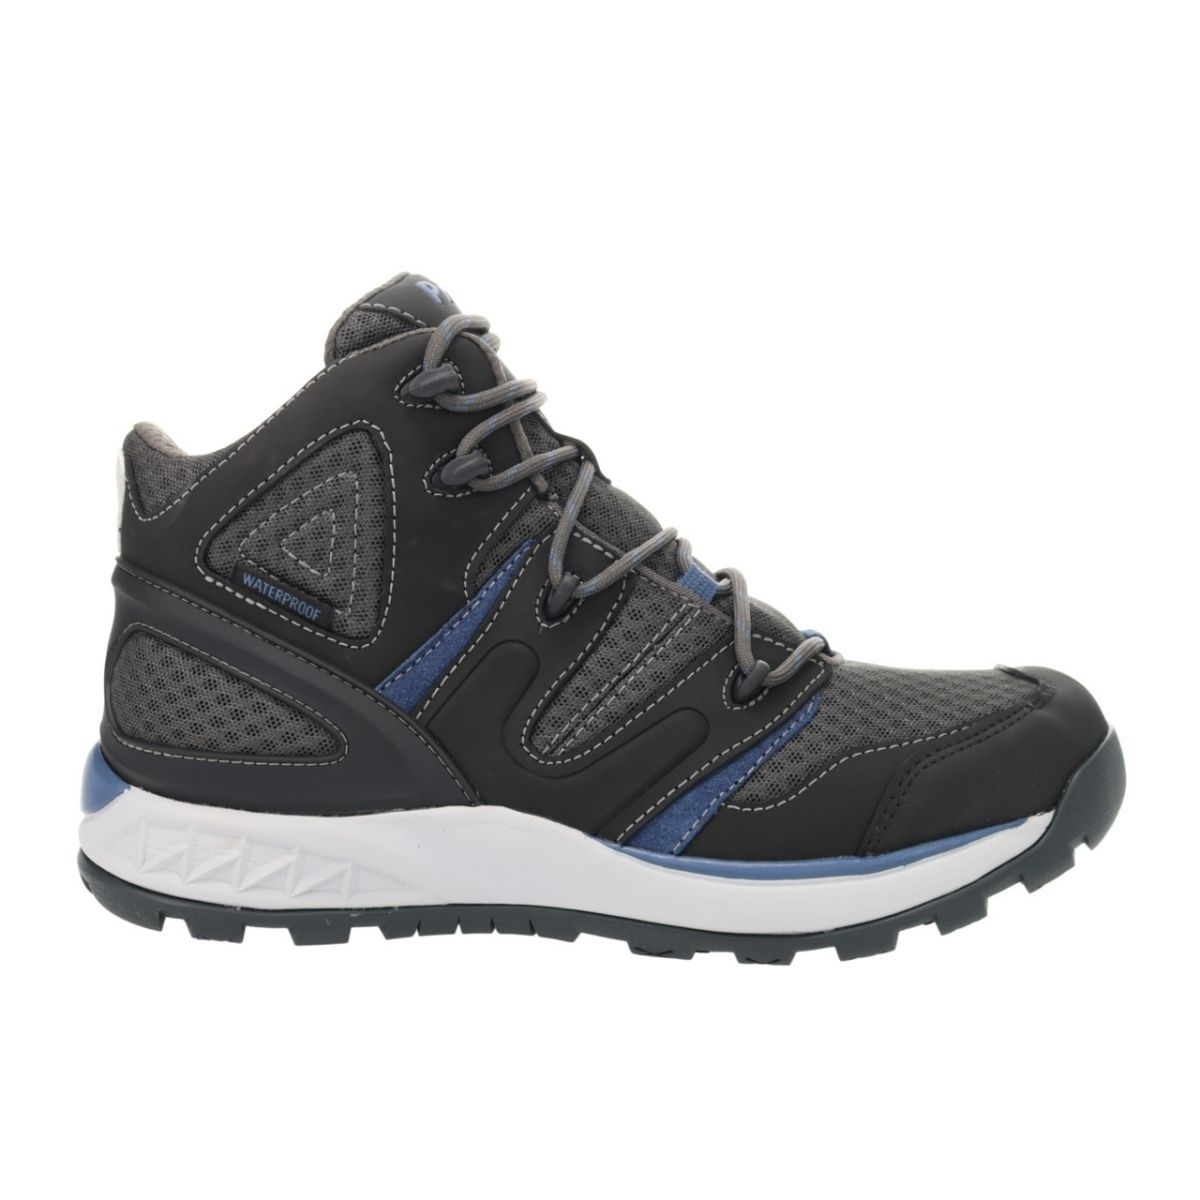 Propet Men's Veymont Waterproof Hiking Boot Grey/Blue - MOA022SGRB GREY/BLUE - GREY/BLUE, 13 X-Wide